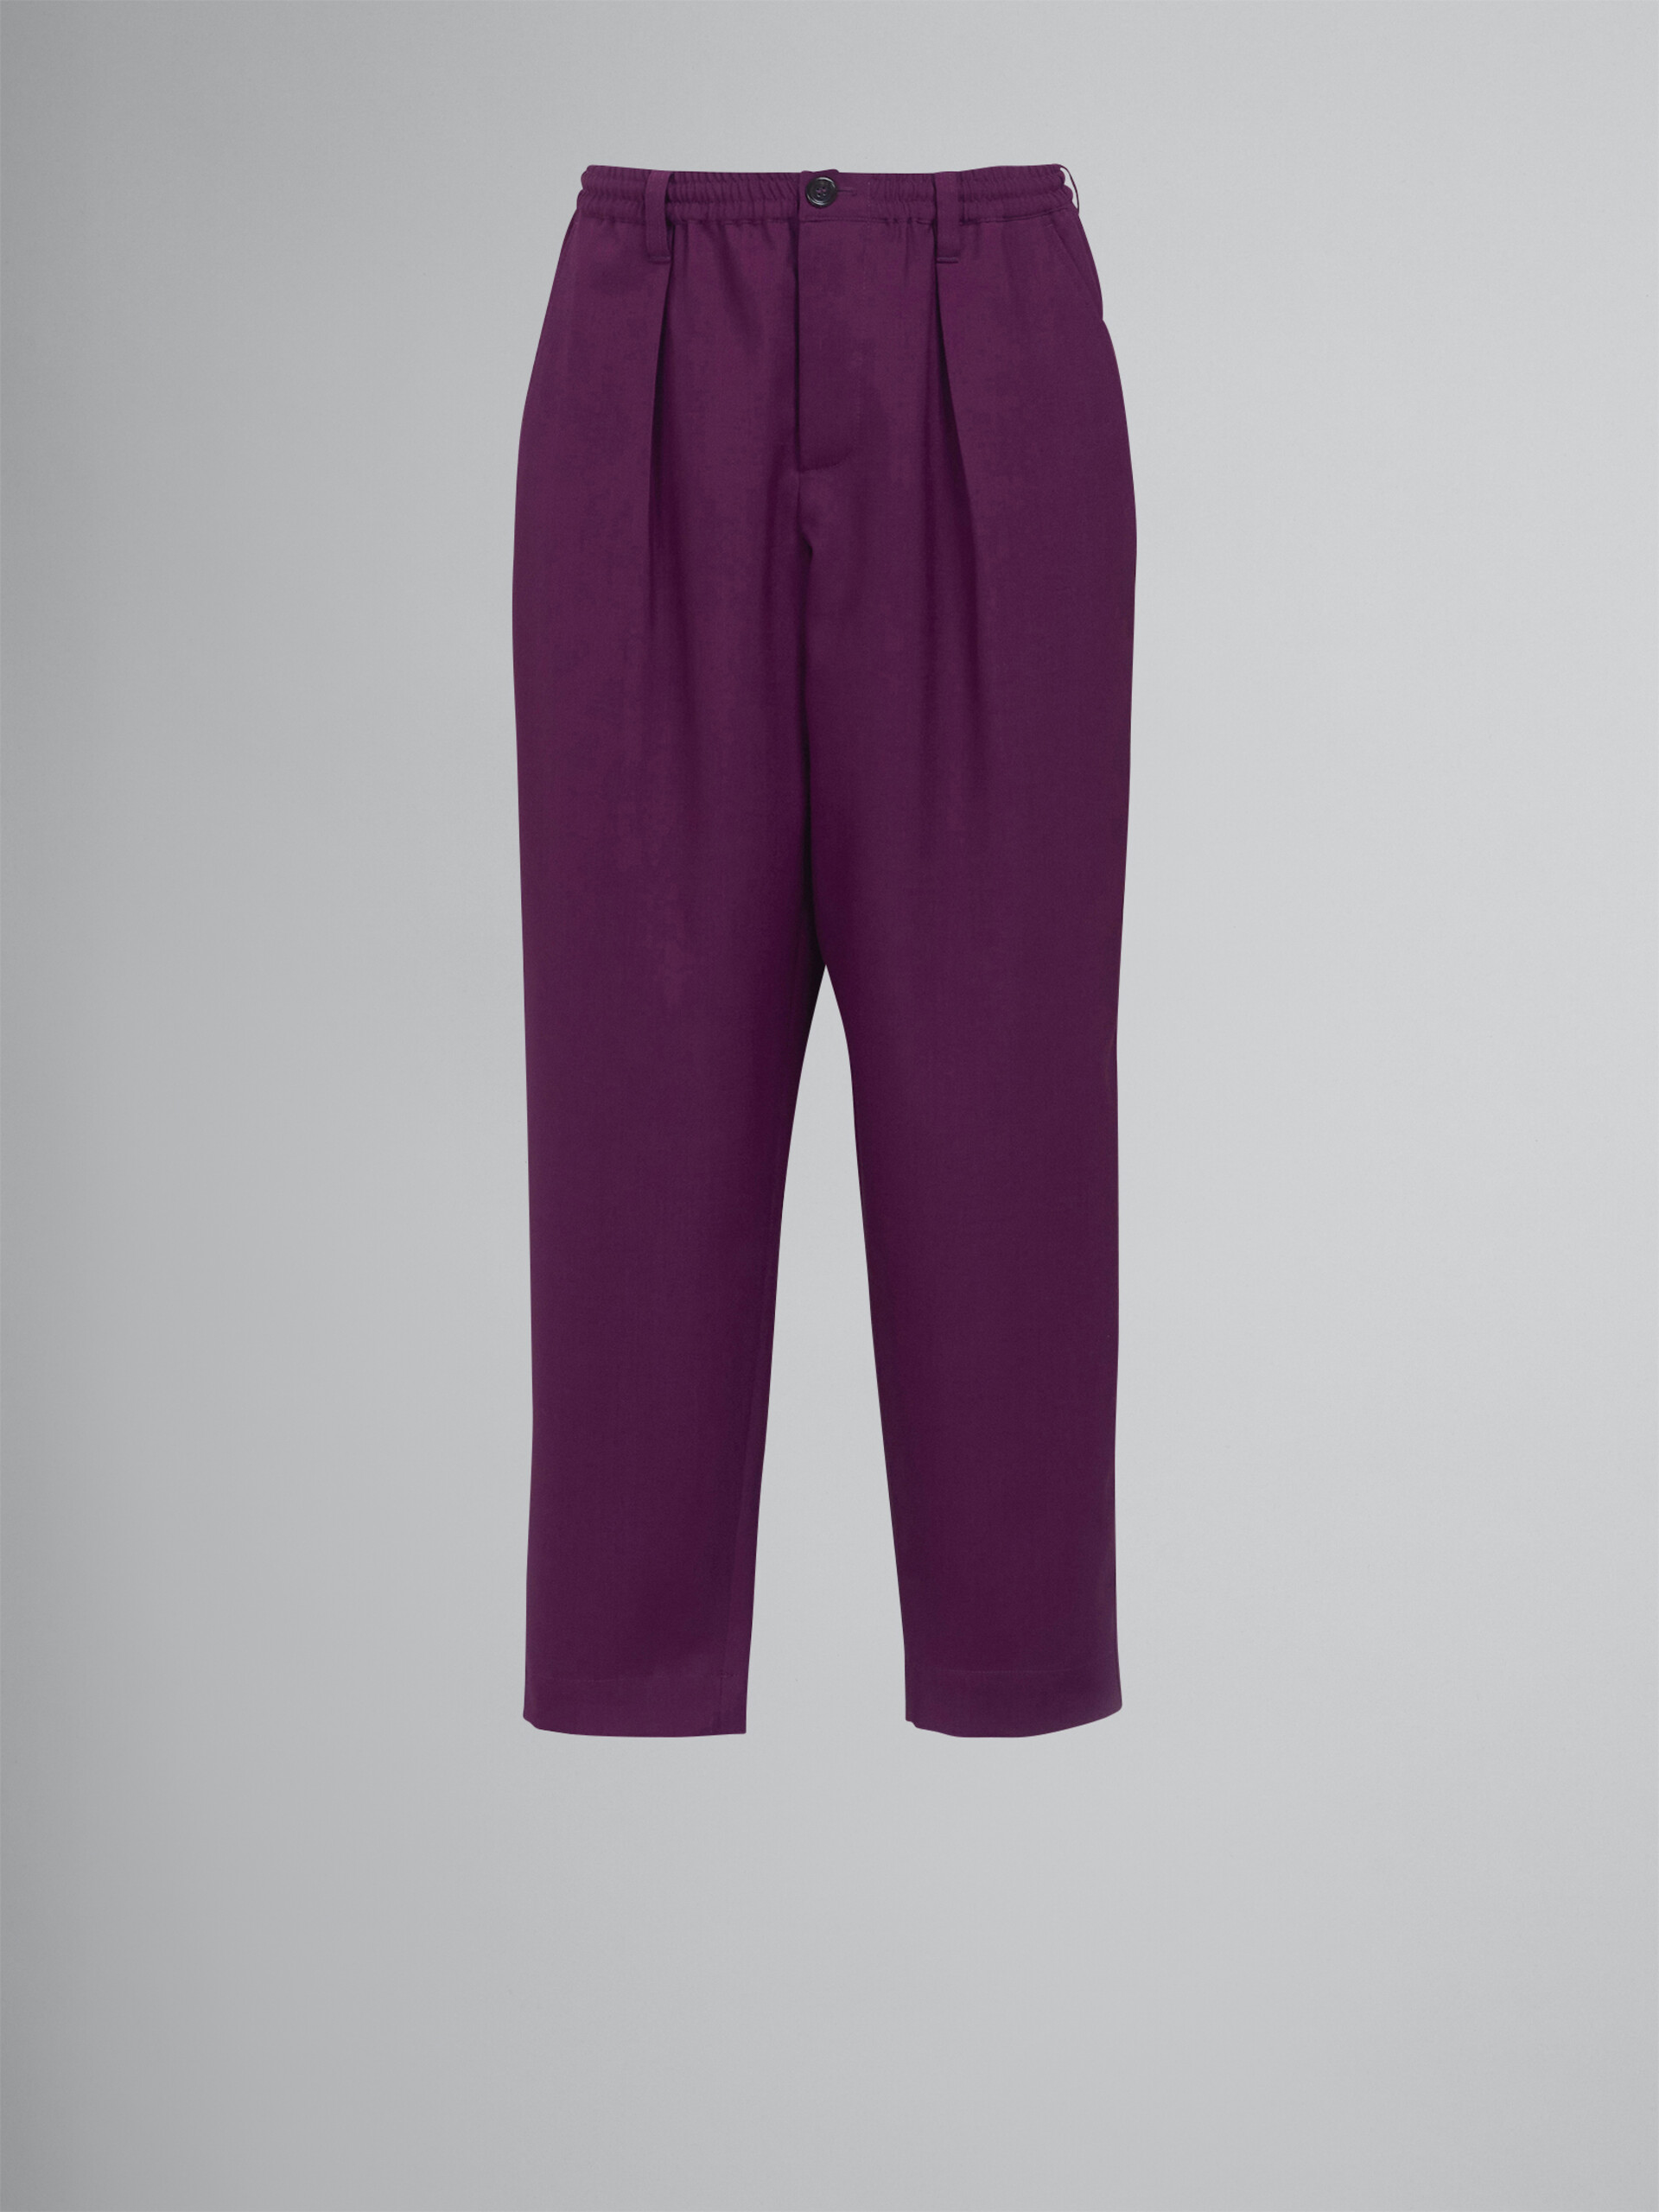 Purple tropical wool pants - Pants - Image 1